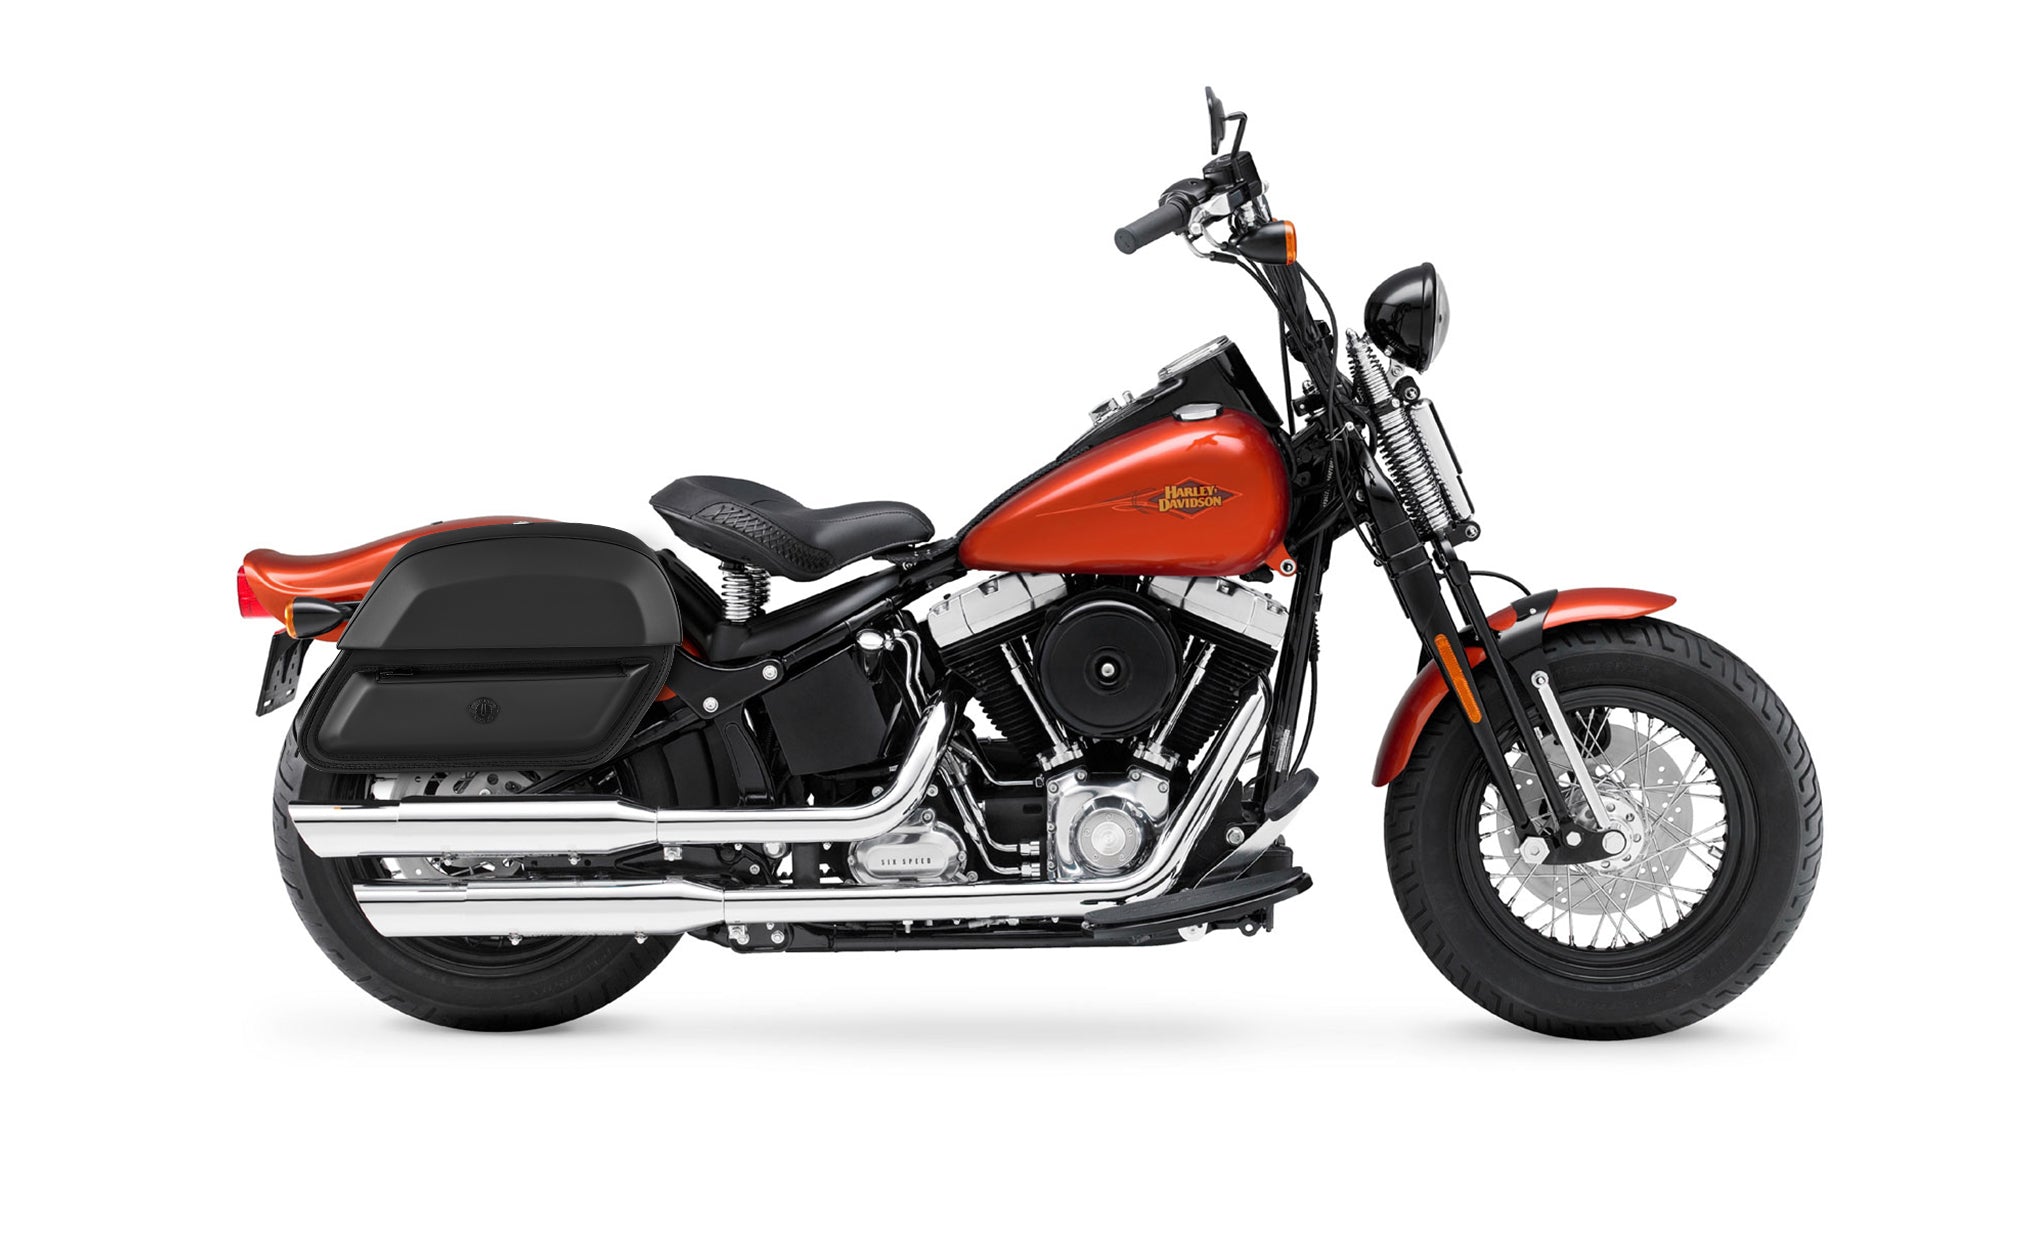 28L - Wraith Medium Leather Saddlebags for Harley Softail Cross Bones FLSTSB BAG on Bike View @expand